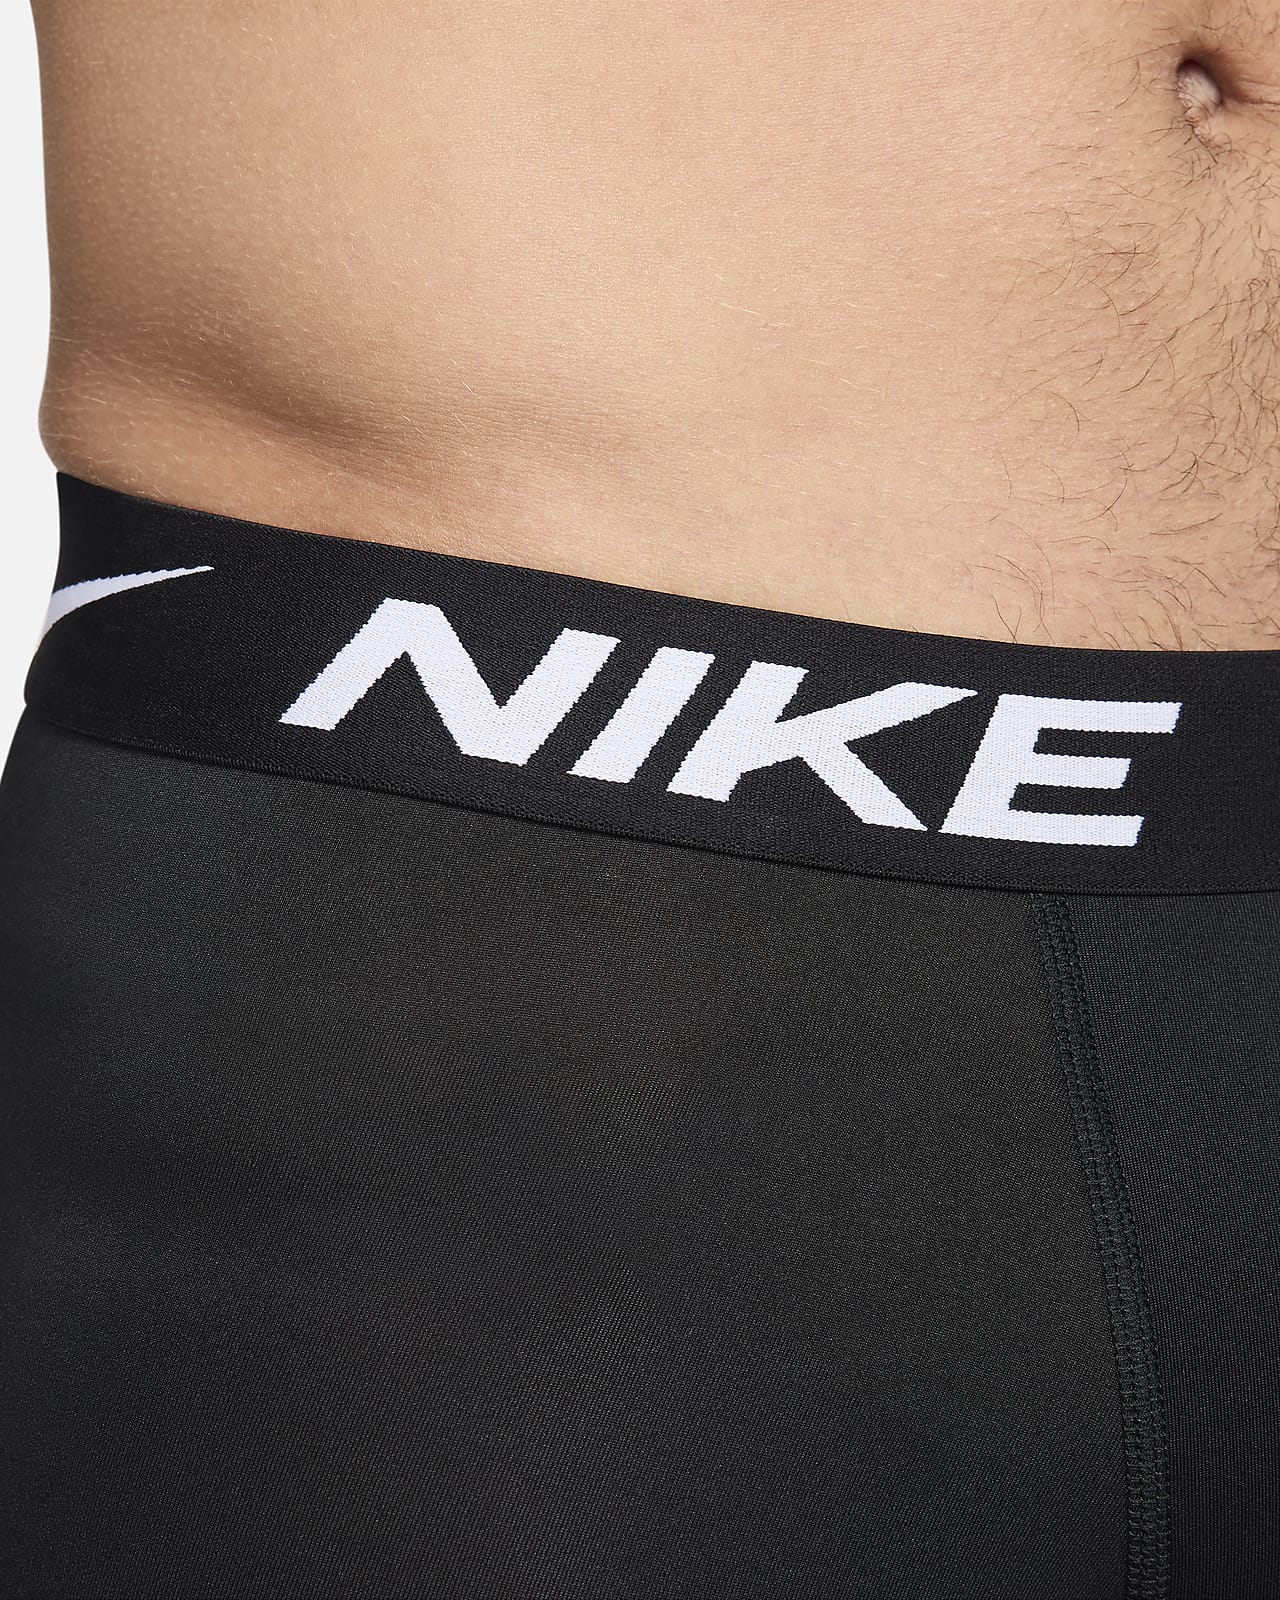 Nike Dri-FIT Essential Micro Men's Trunks (3-Pack)